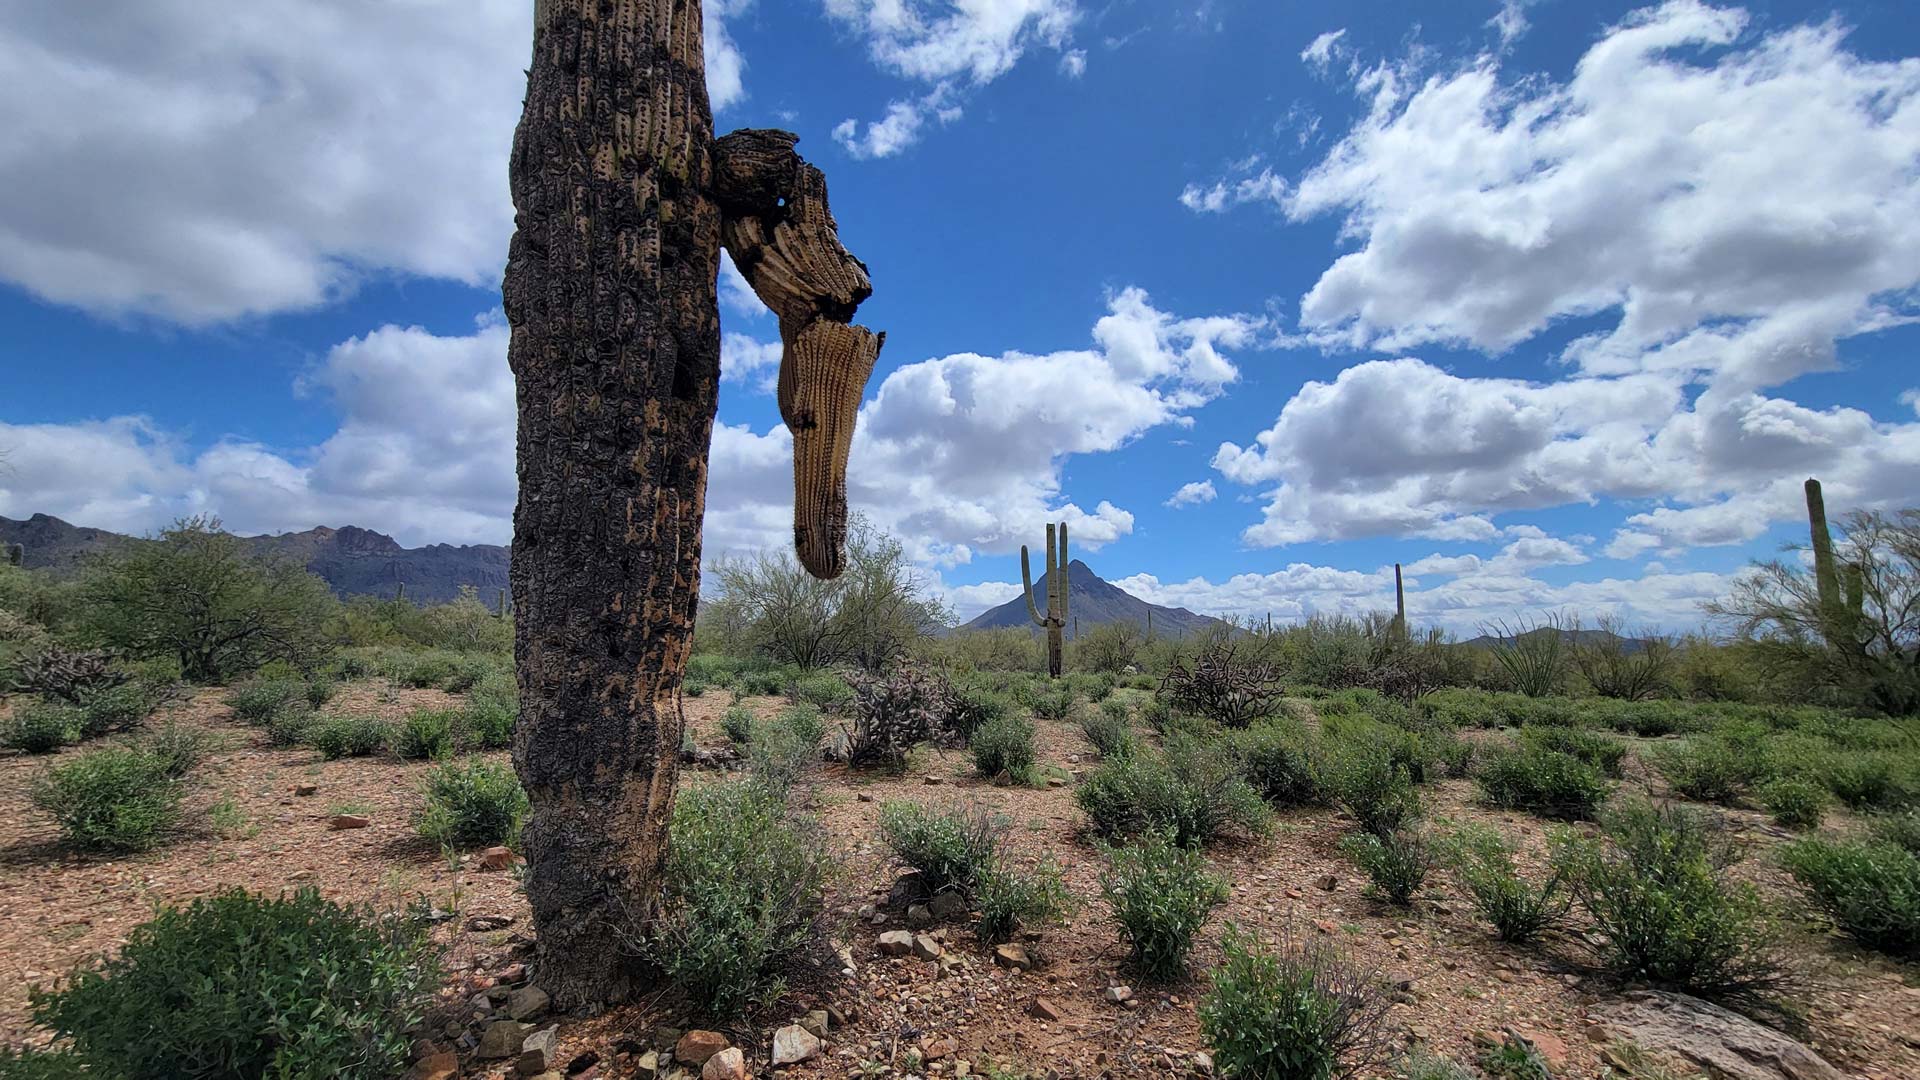 Saguaro cactus dying